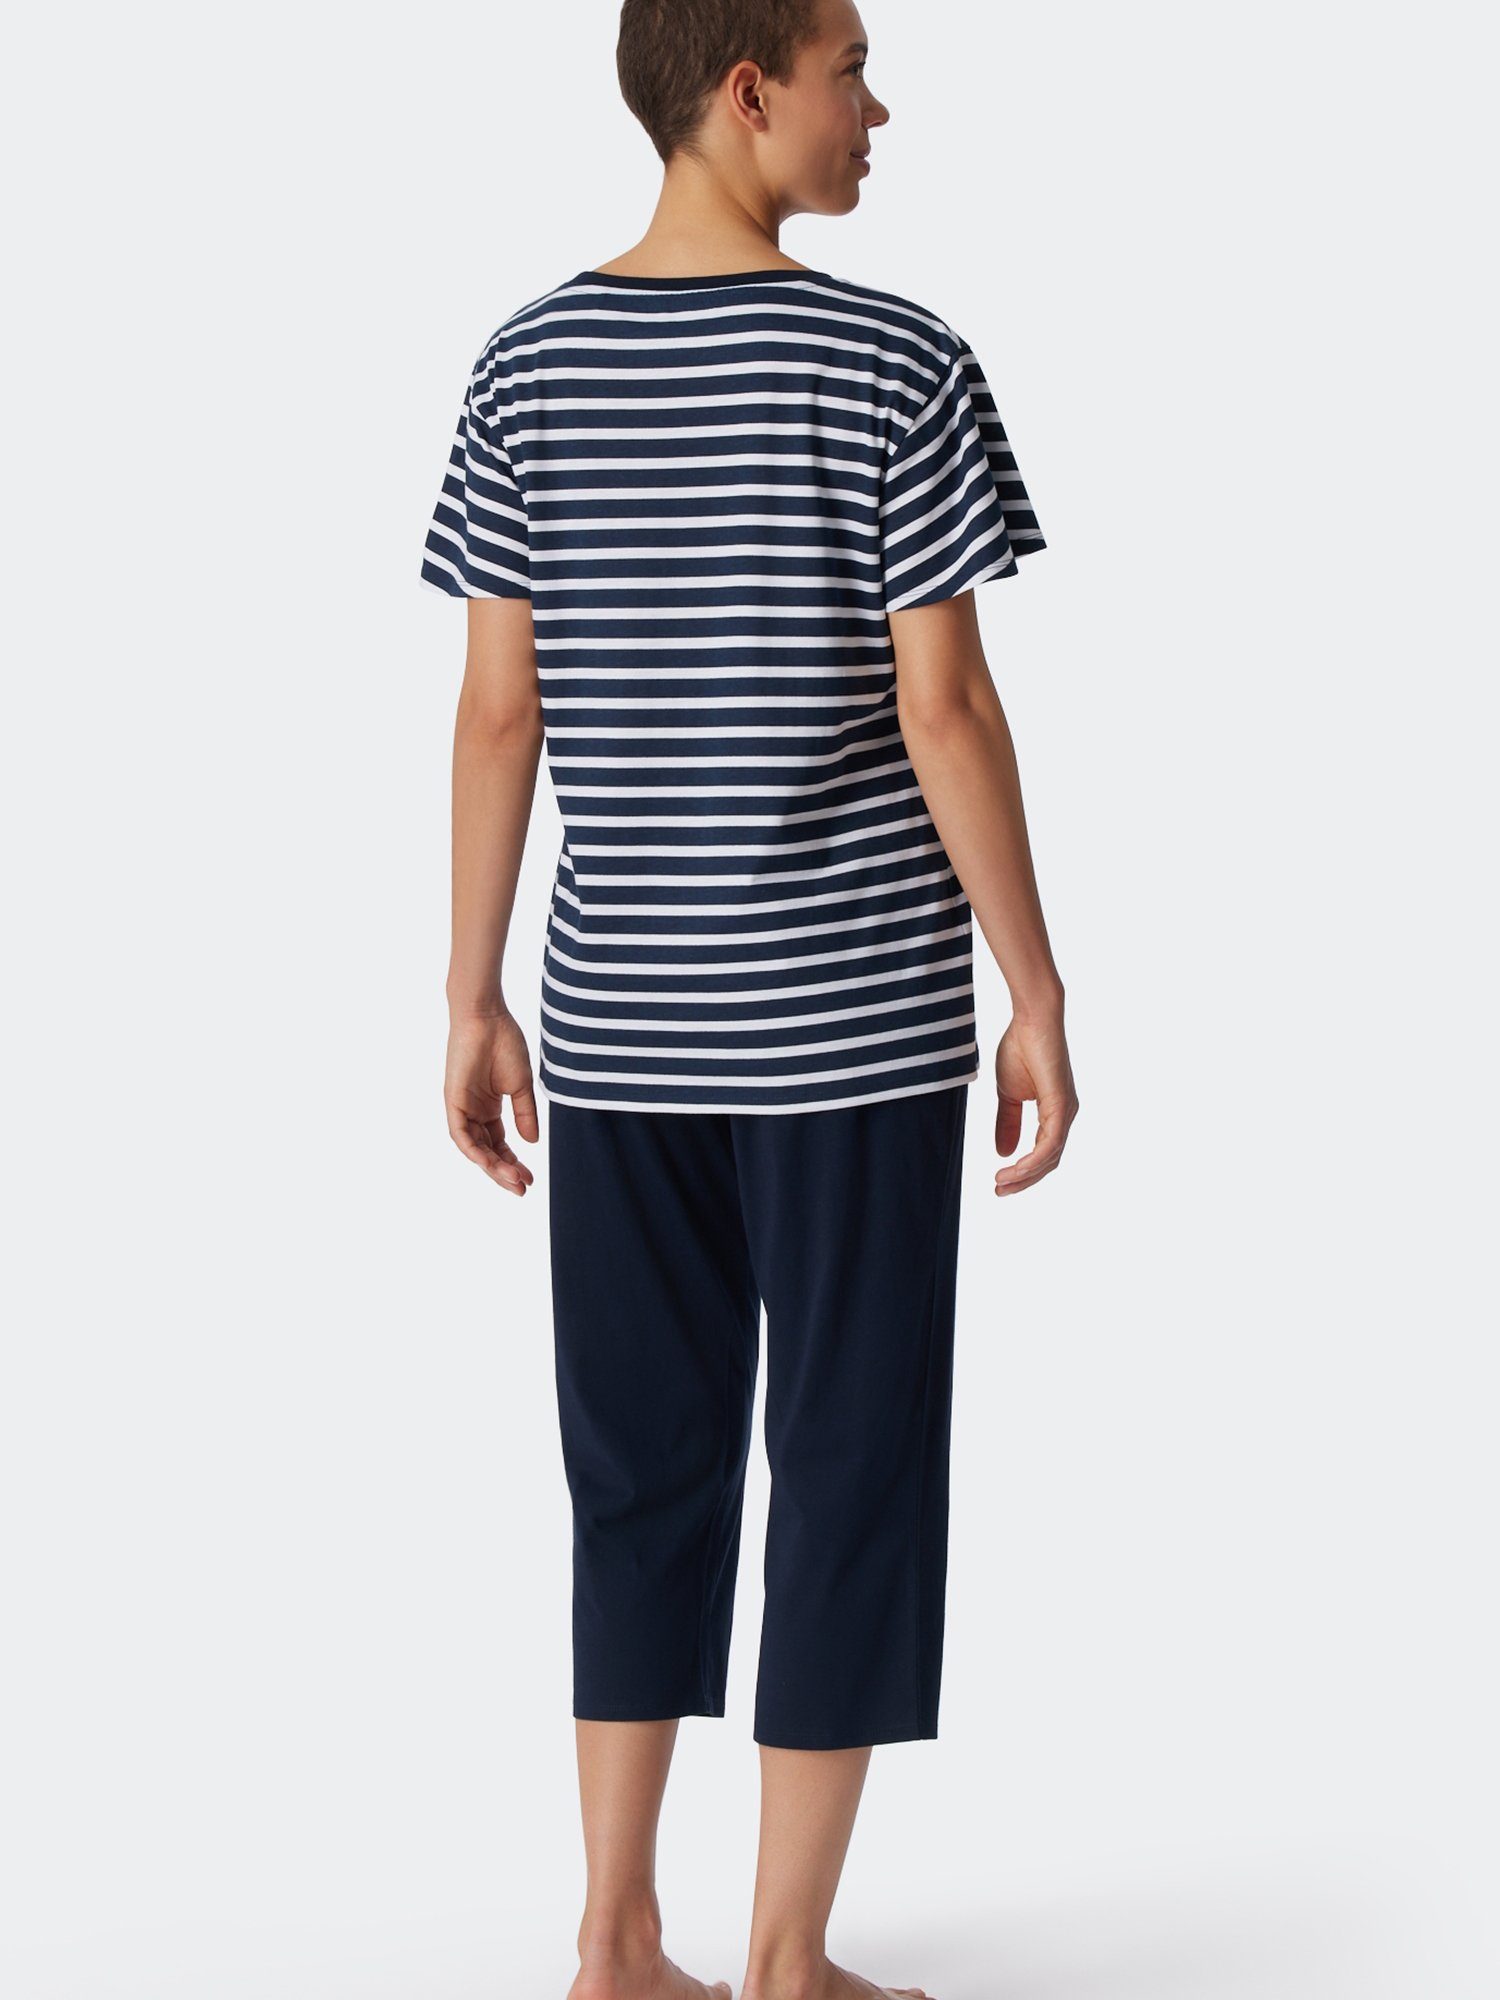 Essential Pyjama Stripes Schiesser dunkelblau